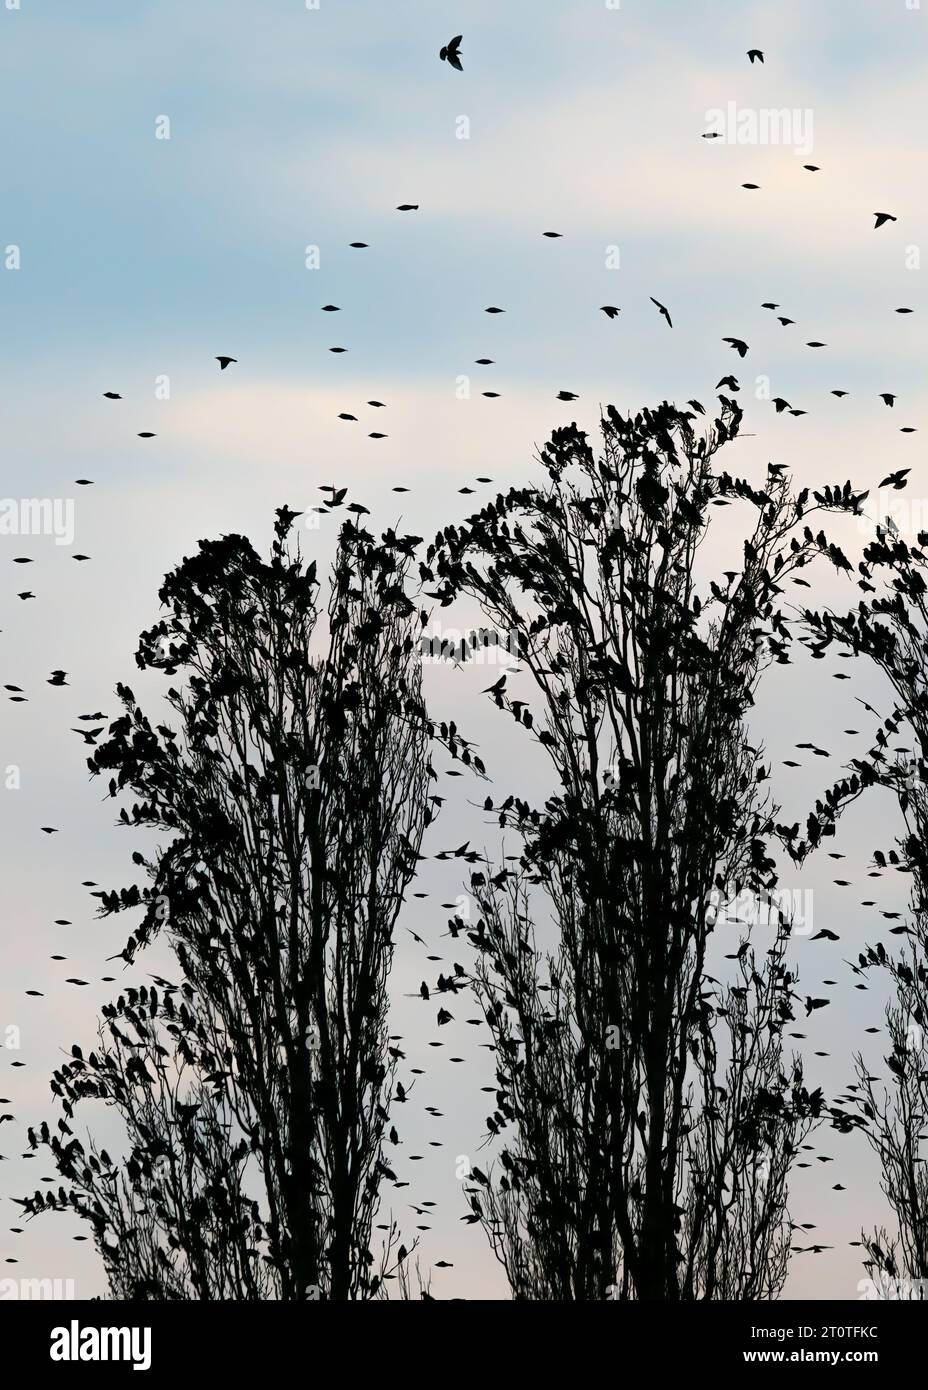 Many Starlings (Sturnus vulgaris) in a Tree. Flock of starlings birds fly in the Netherlands.  Starling murmurations. Stock Photo